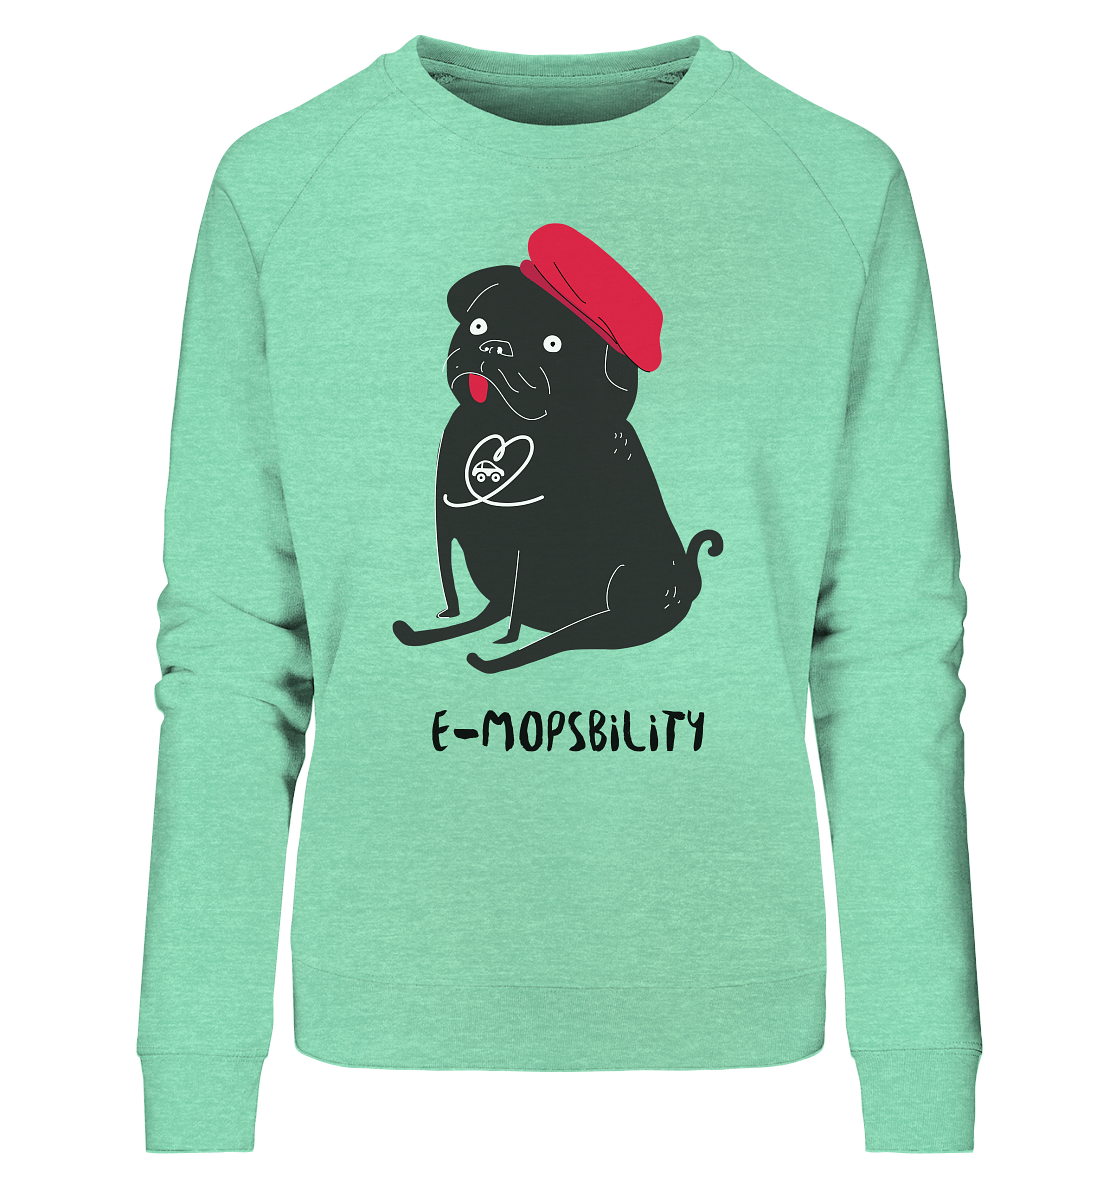 E-Mopsbility ORGANIC - Ladies Organic Sweatshirt